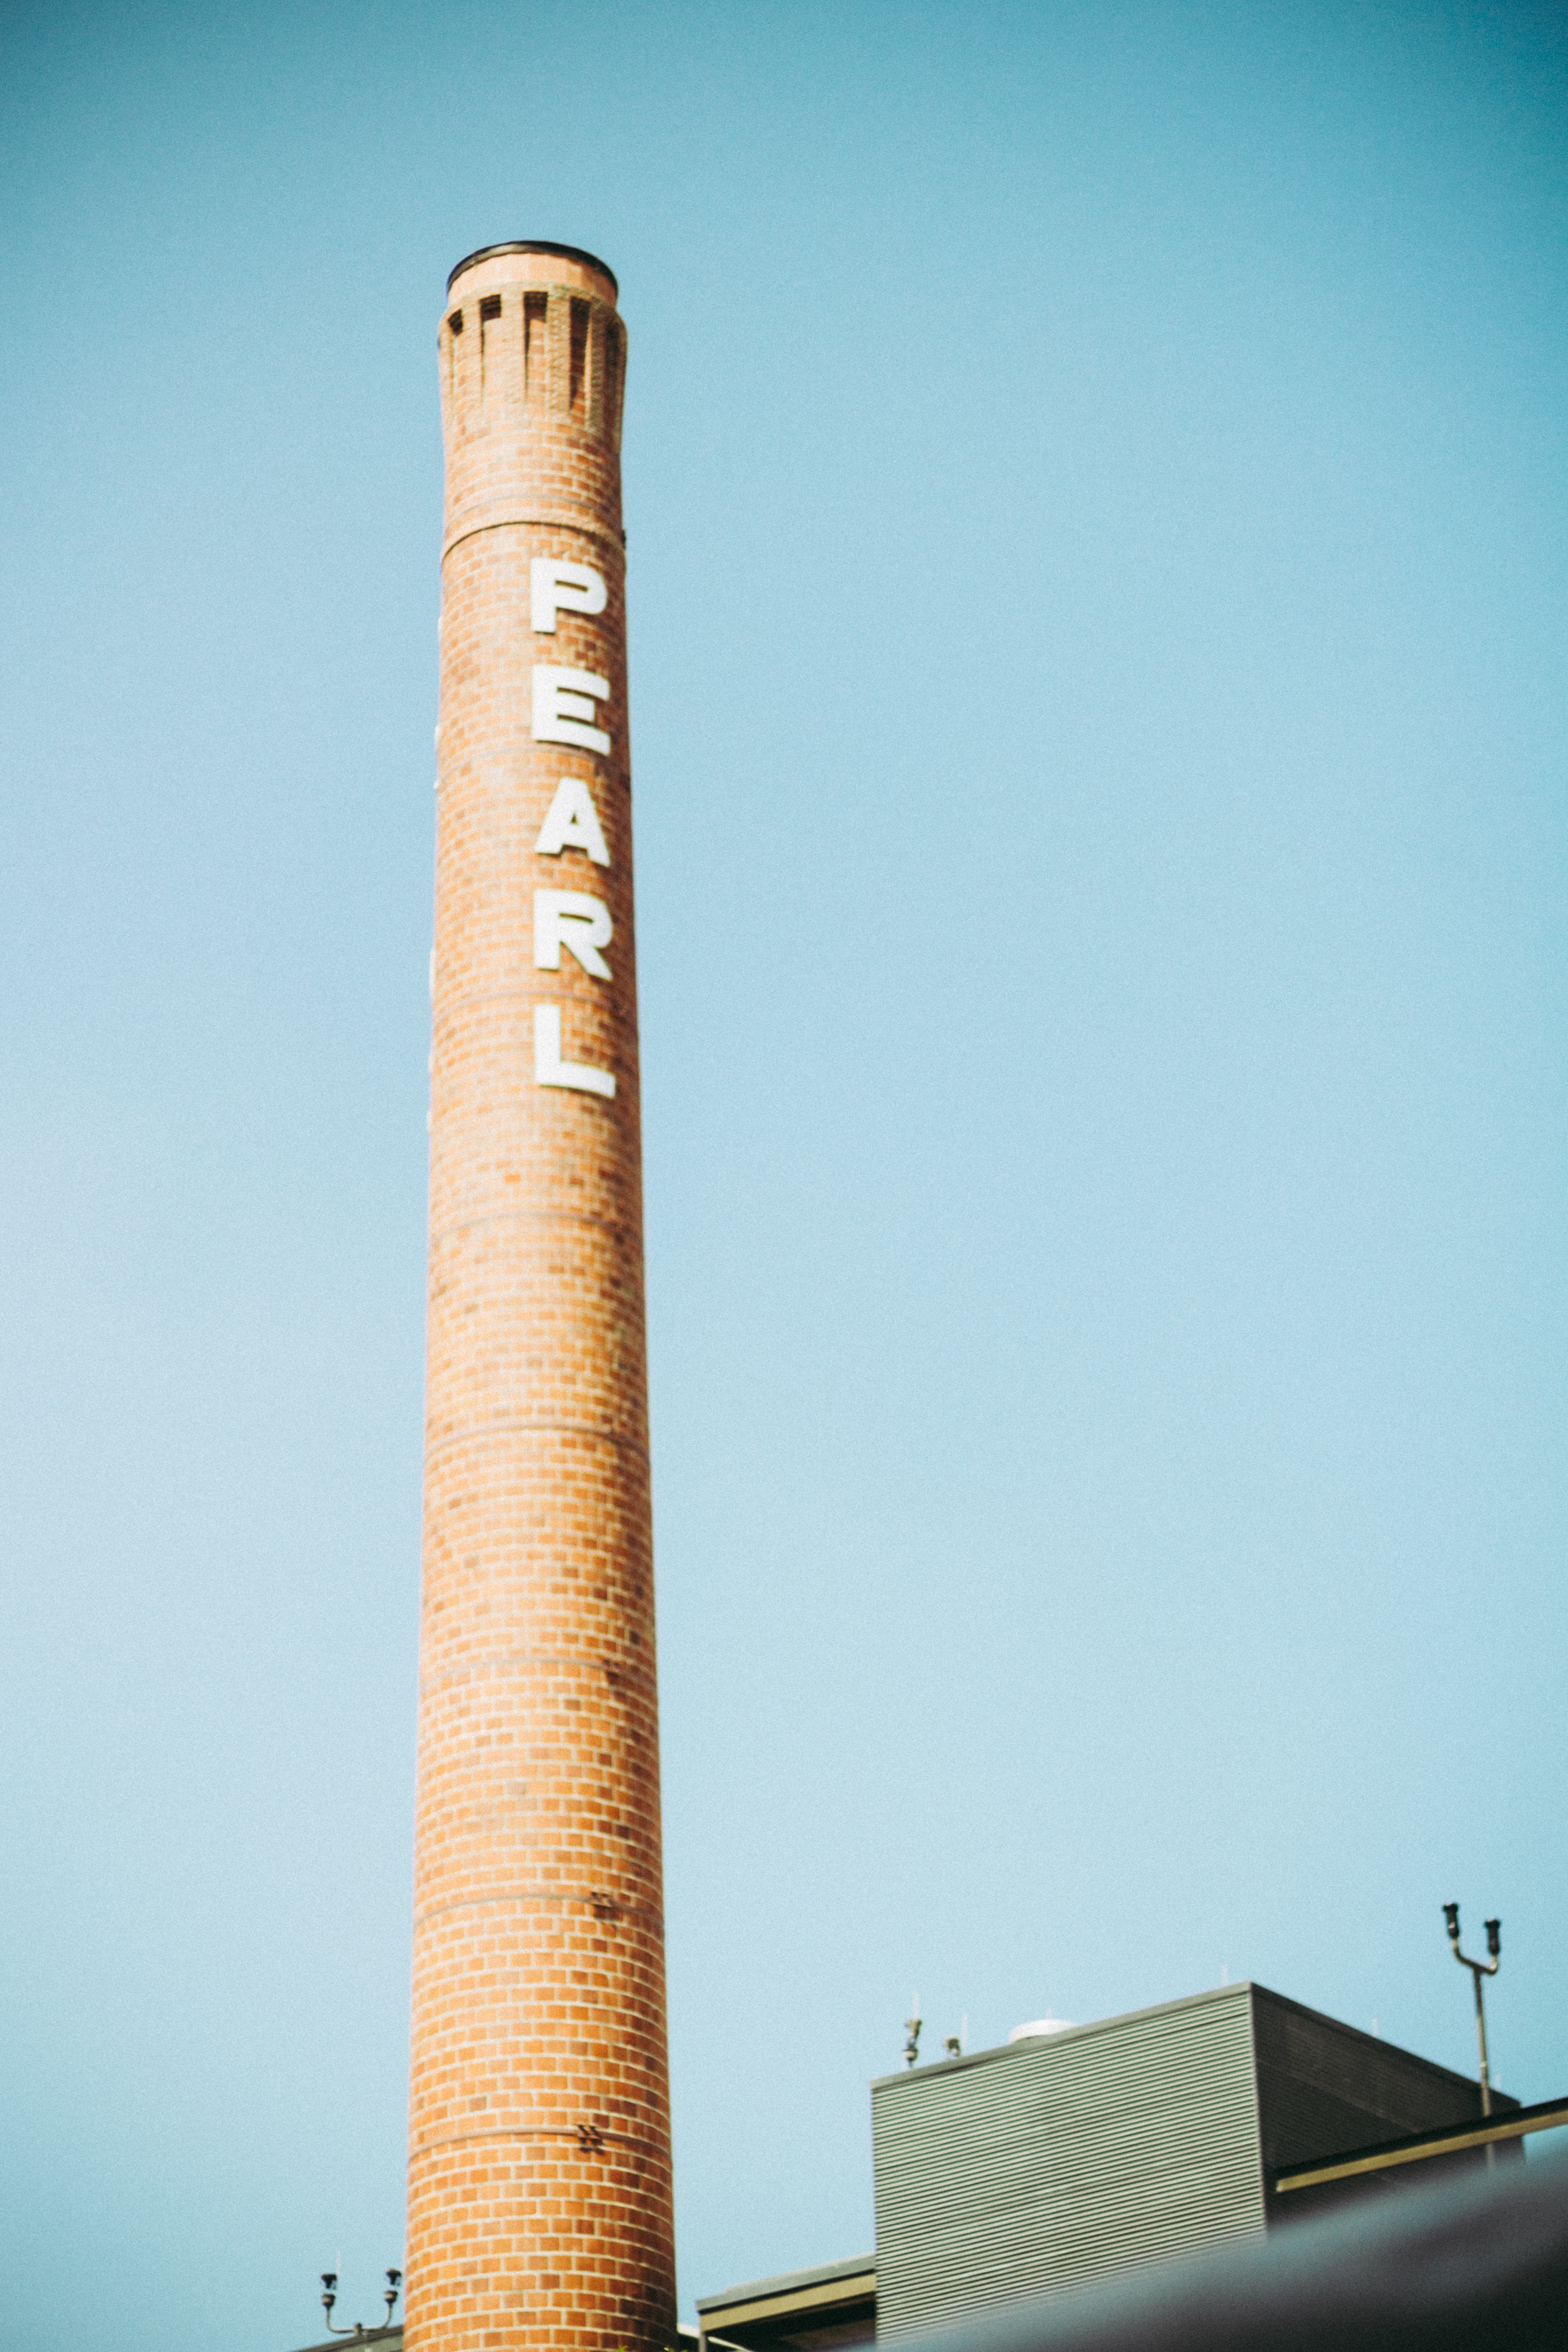 Brown pearl printed tower photo